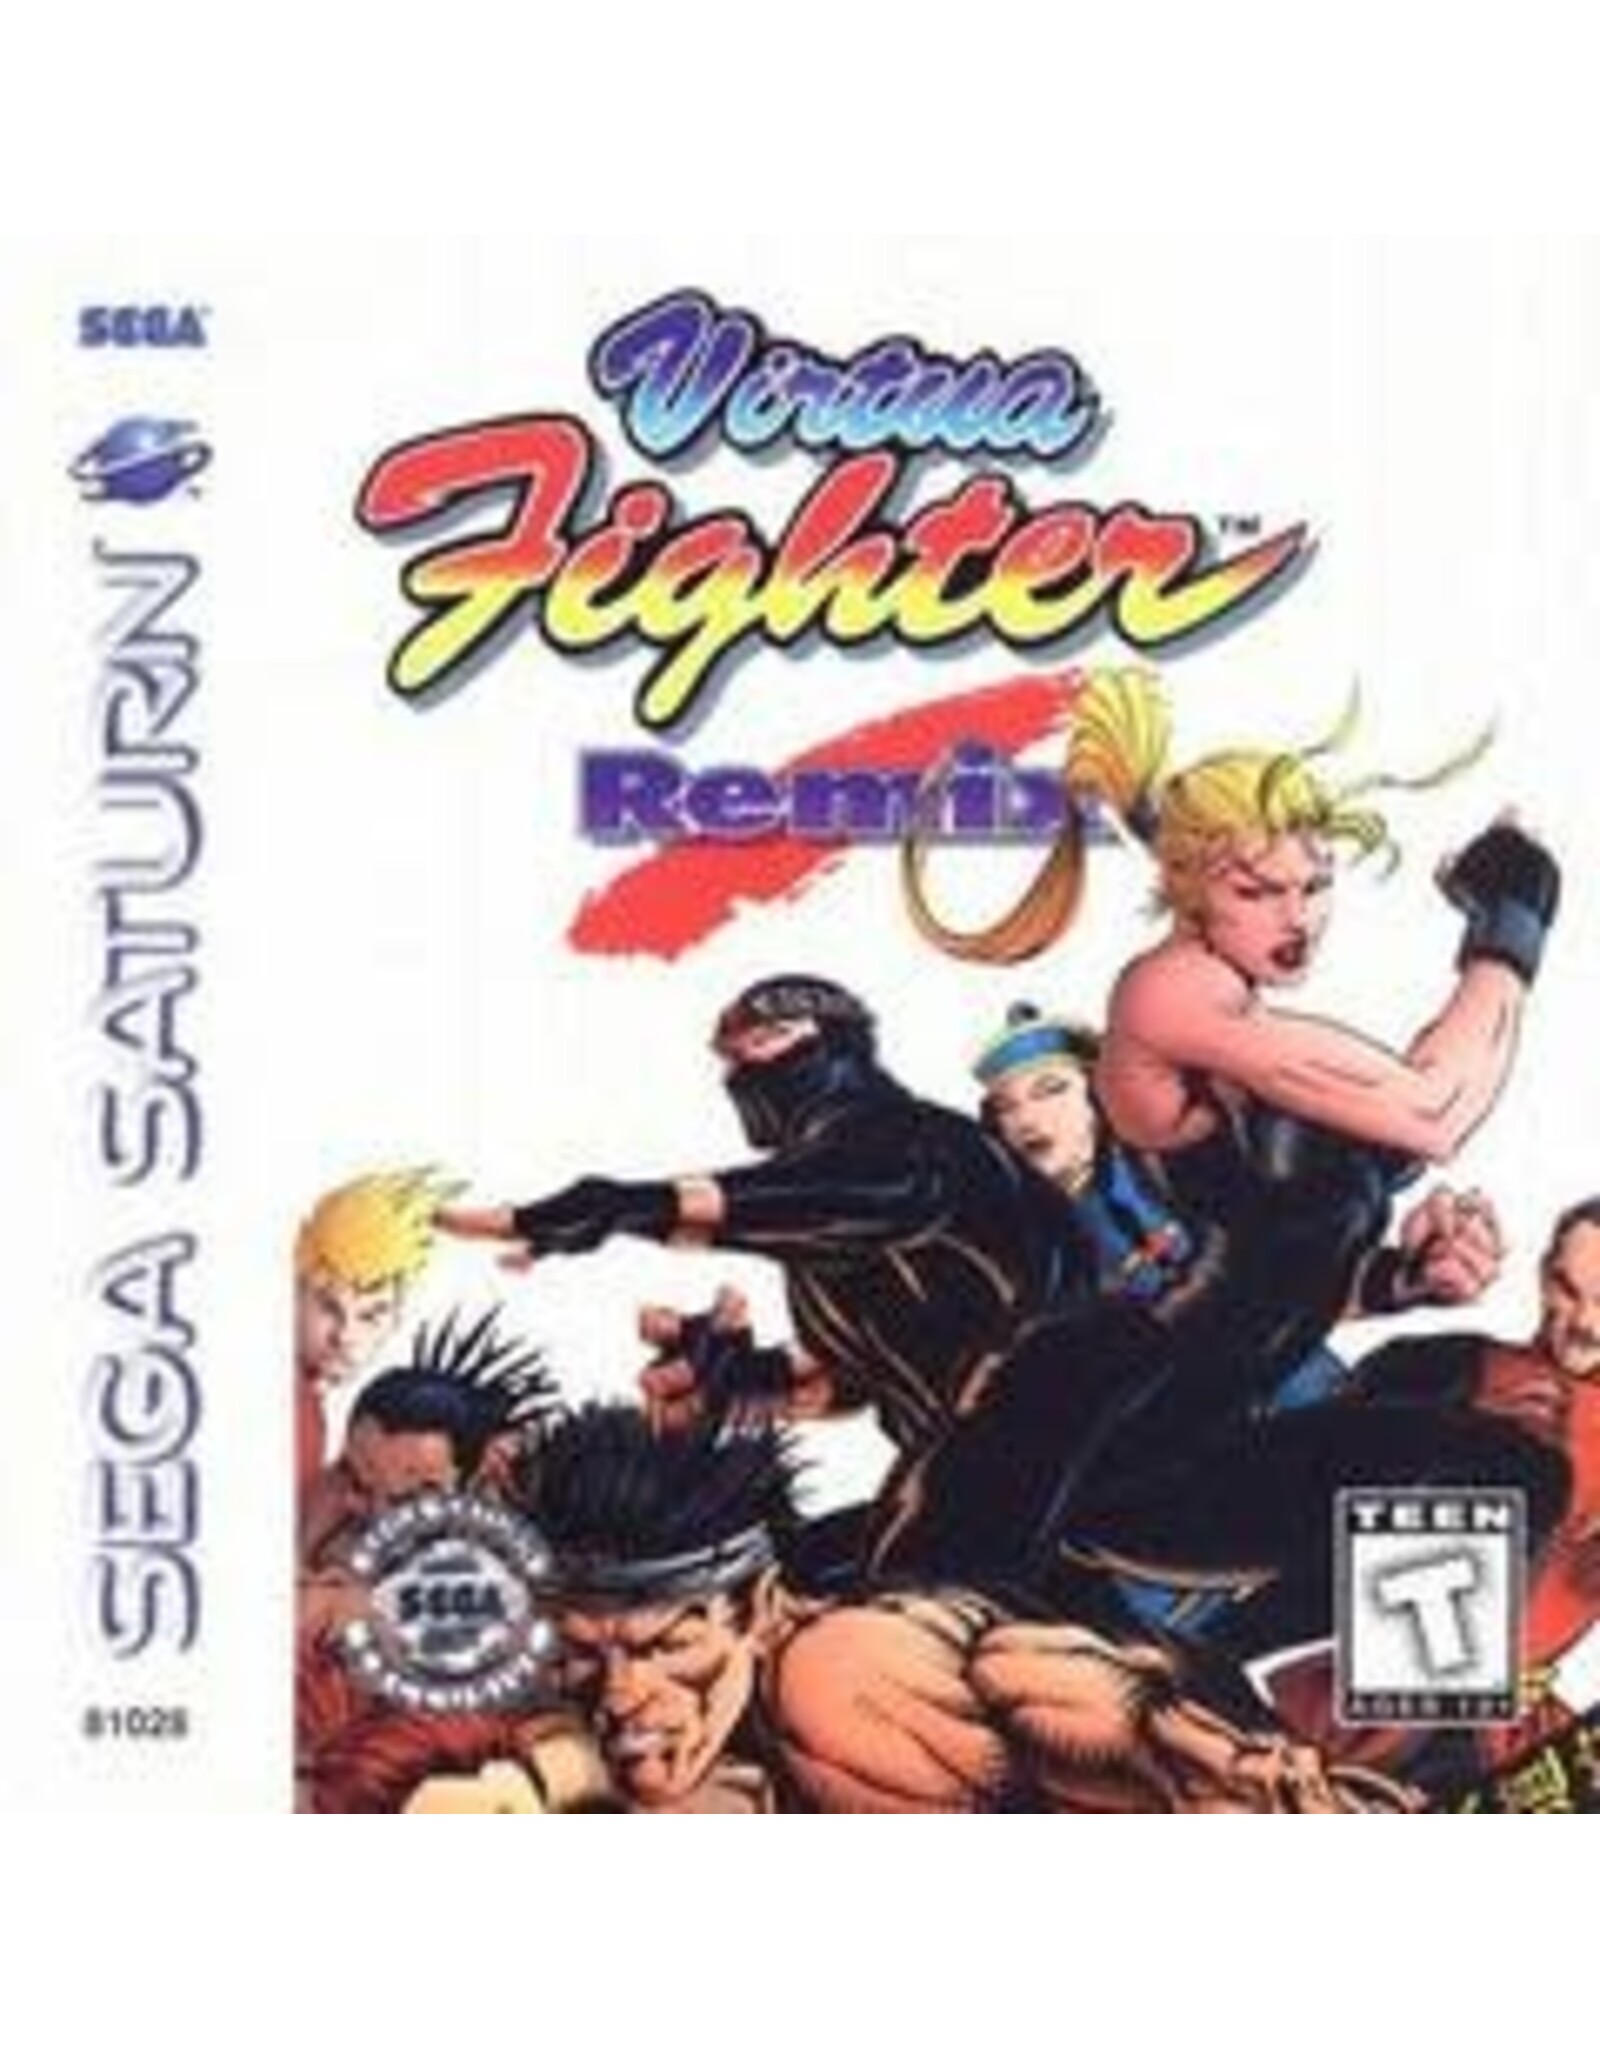 Sega Saturn Virtua Fighter Remix (Not For Resale, Game/Cardboard Sleeve Only, Lightly Damaged Sleeve)